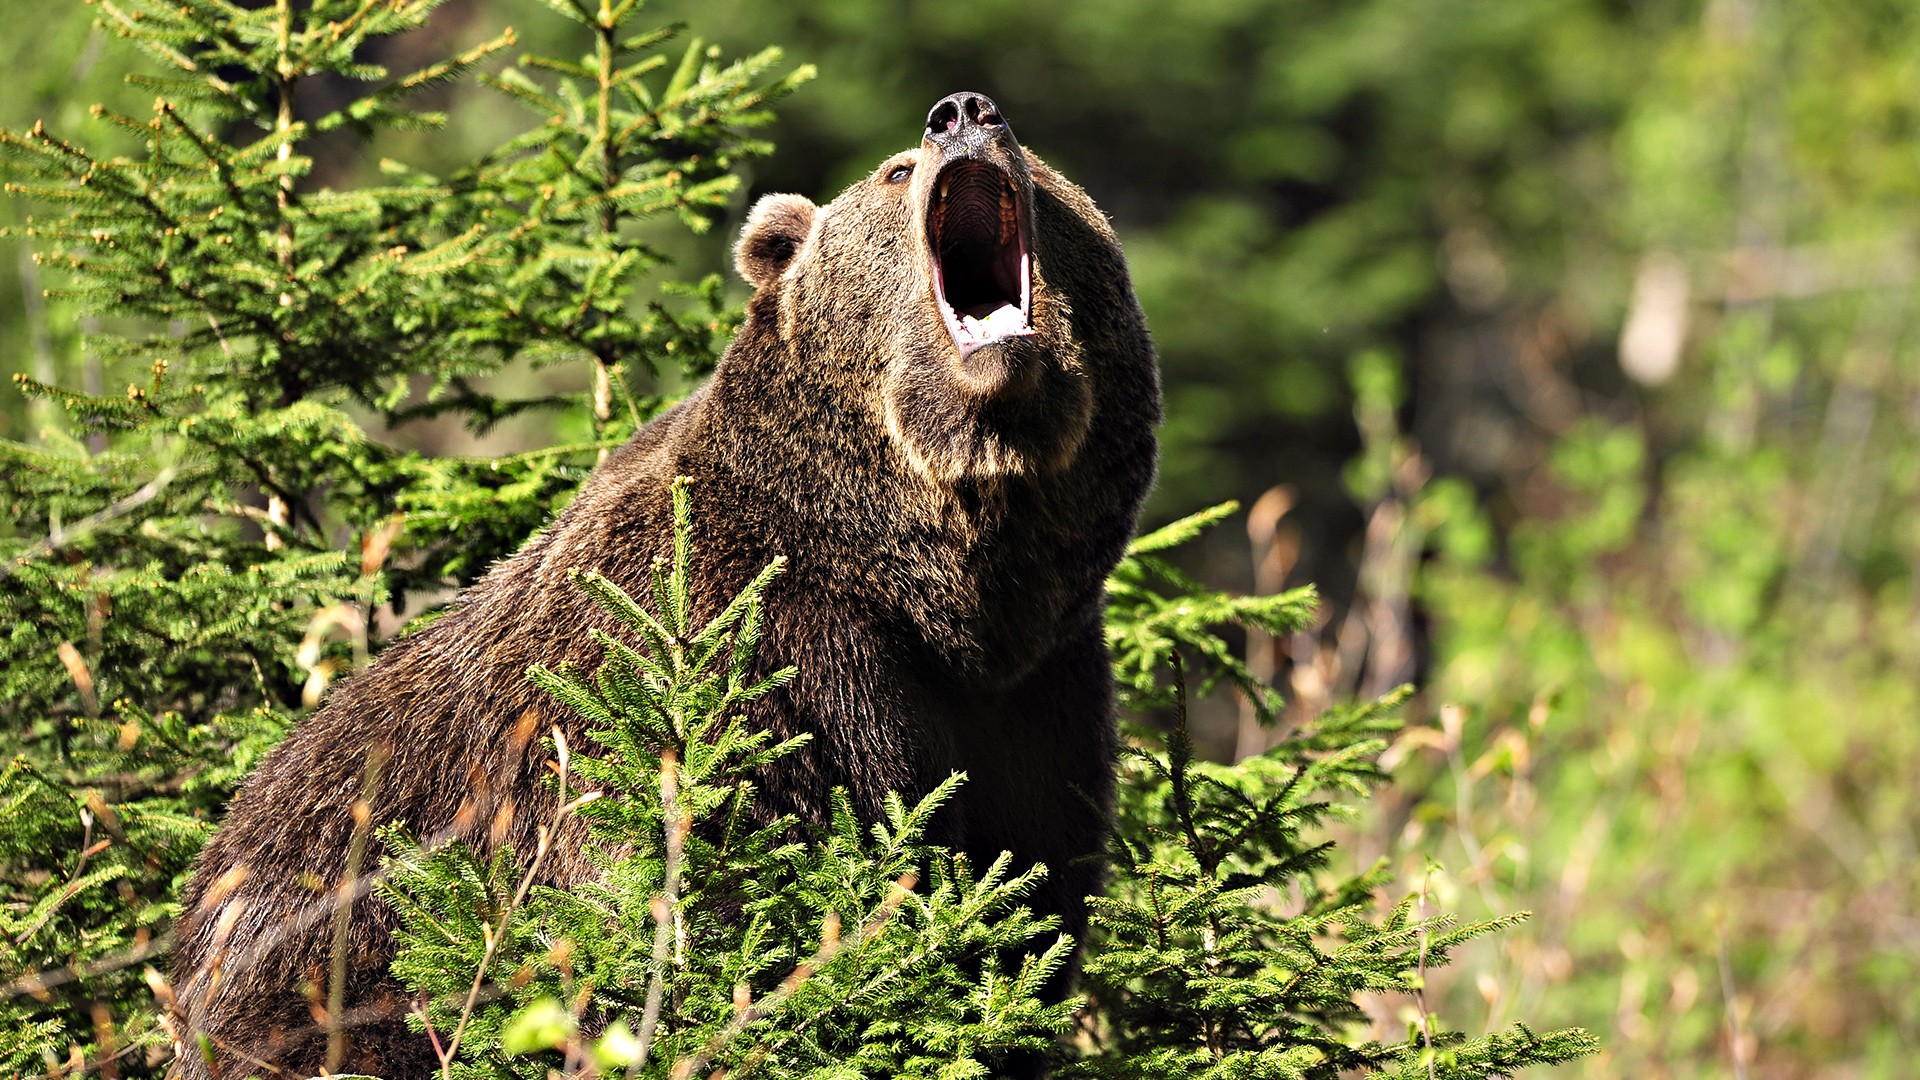 Desktop wallpaper: Animal bear